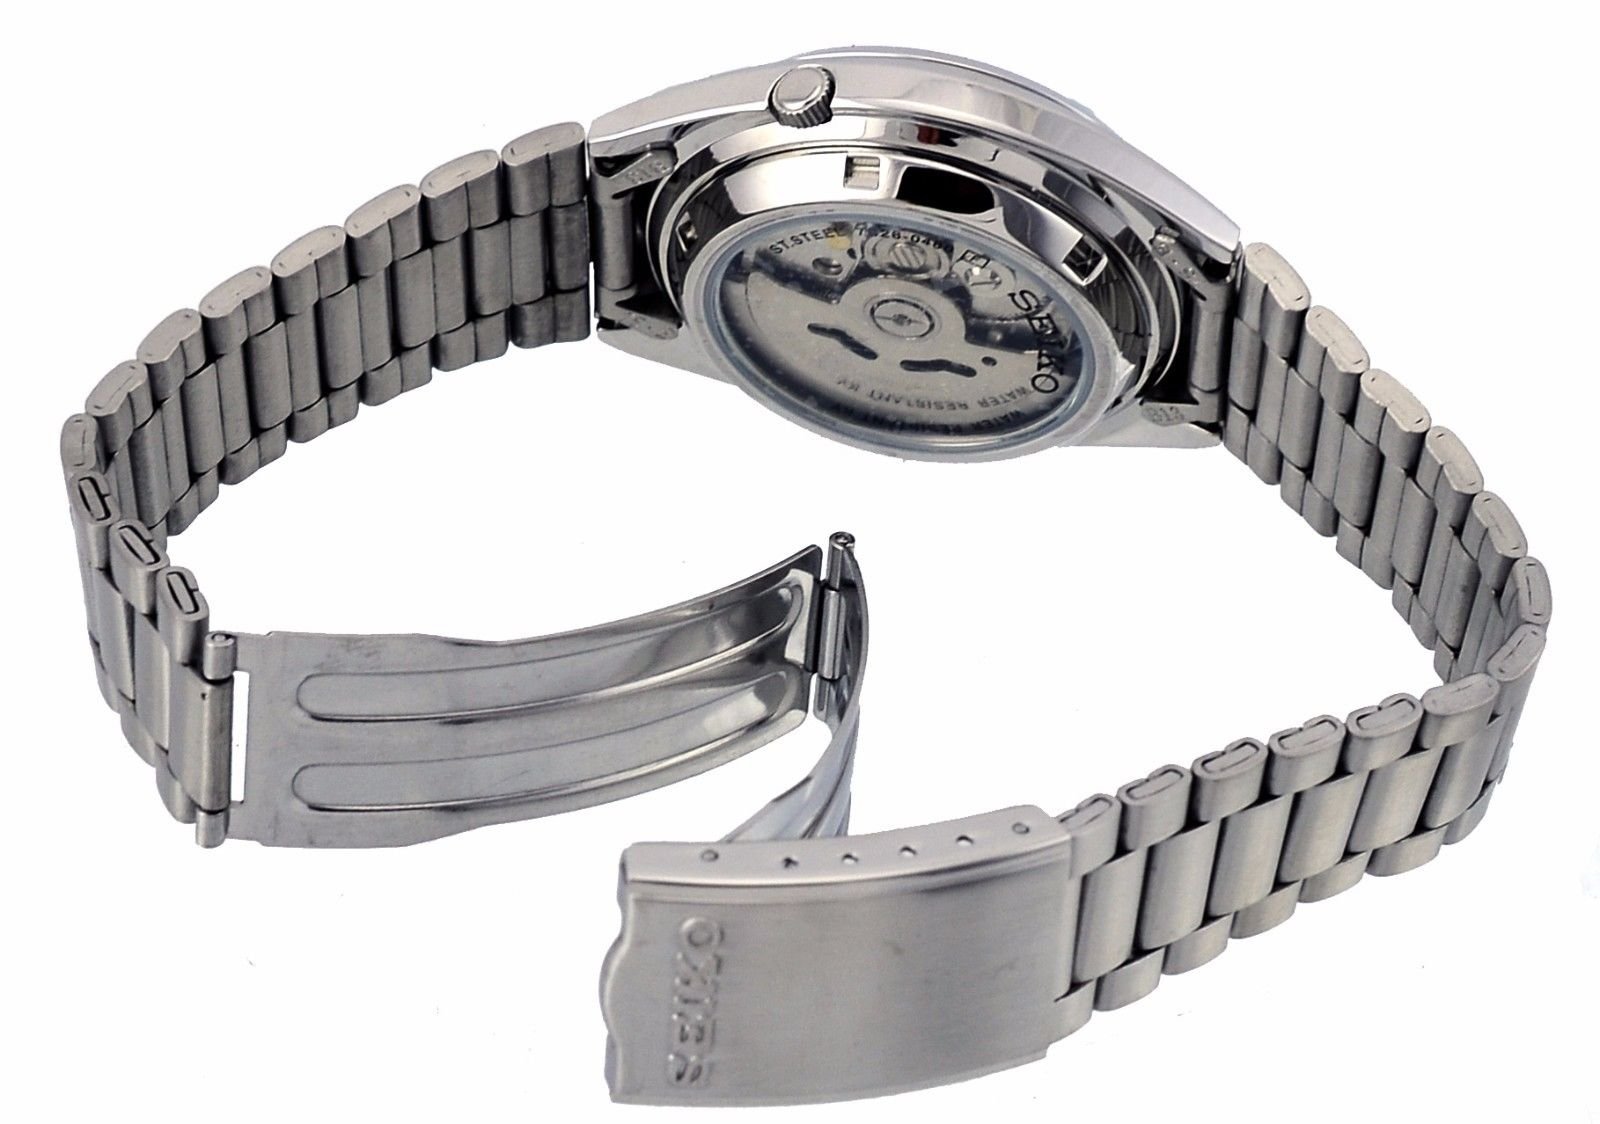 SEIKO 5 Men's Stainless Steel Watch